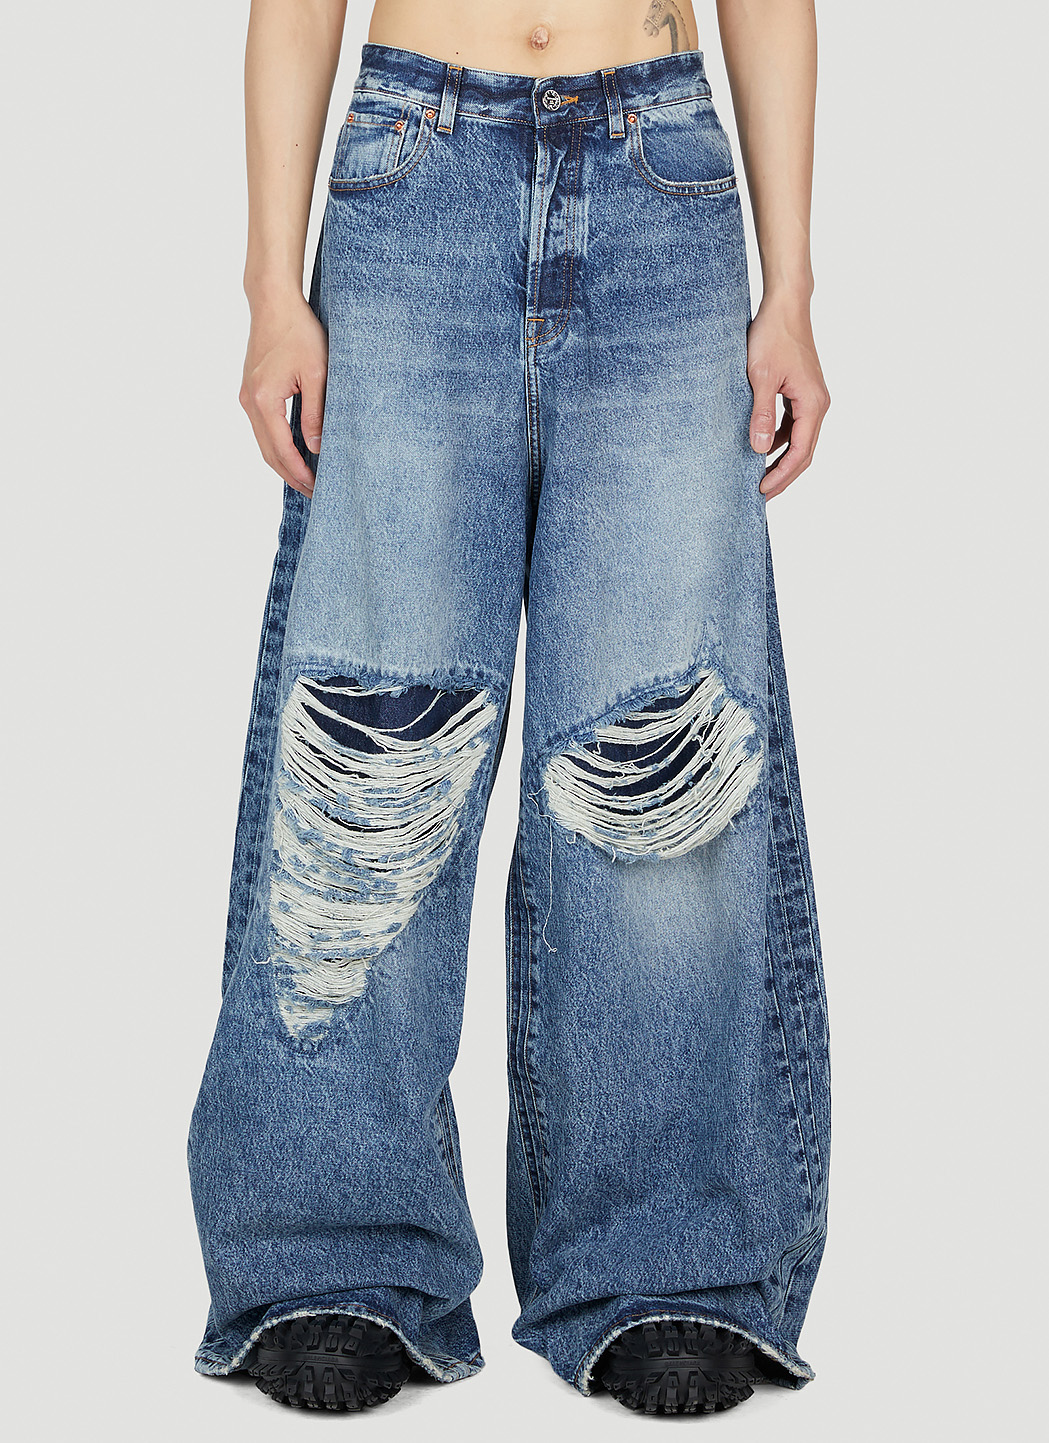 QC] VETEMENTS Blue Distressed Jeans : r/QualityReps